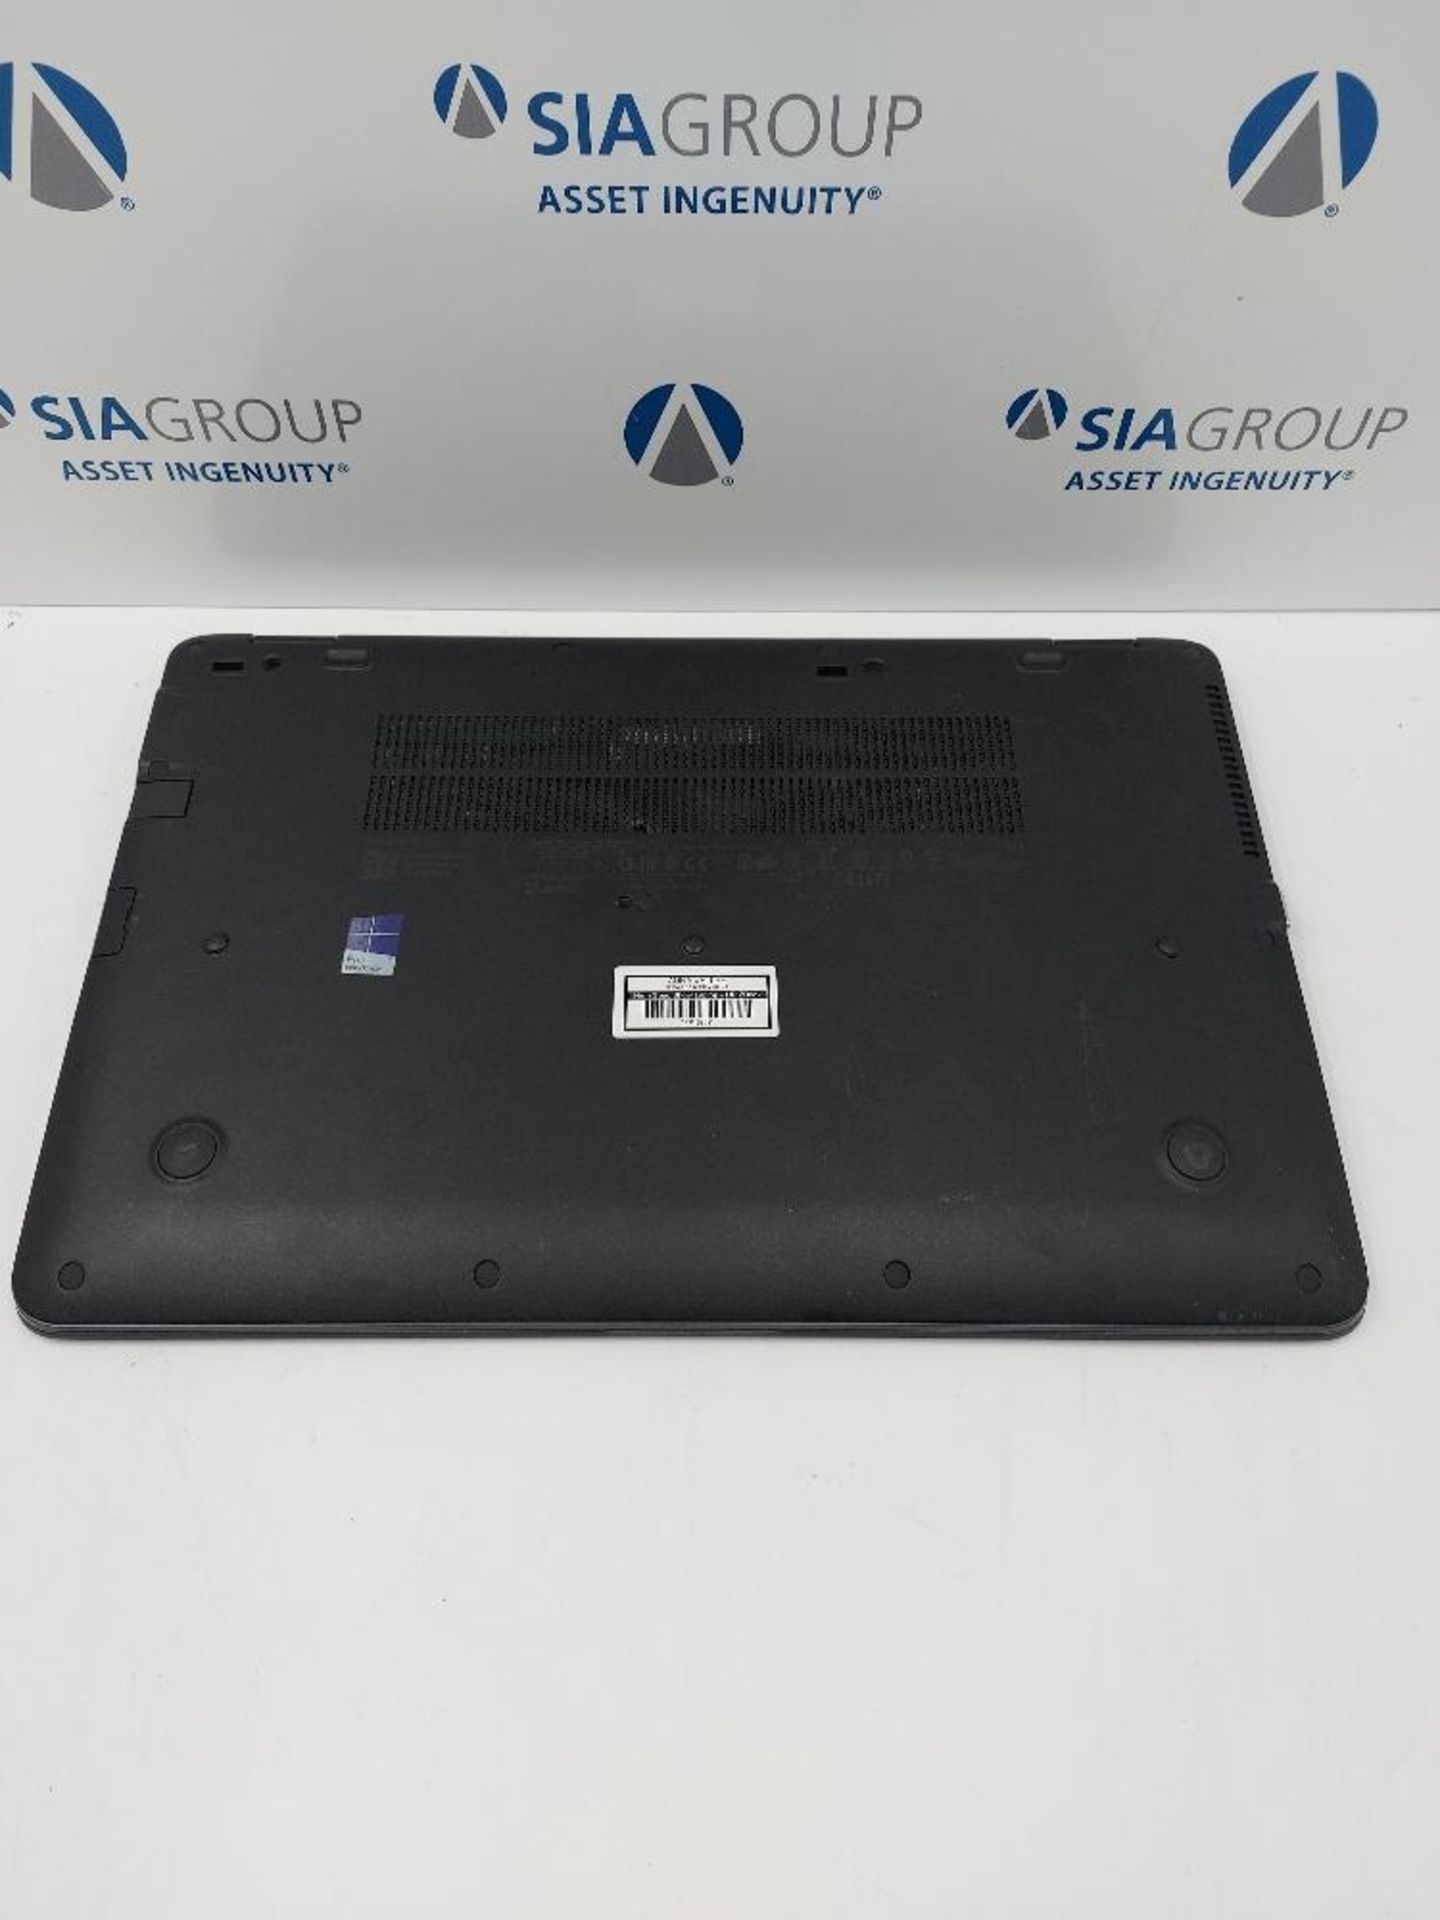 HP Zbook 15u G3 Laptop with Flight Case - Image 9 of 11